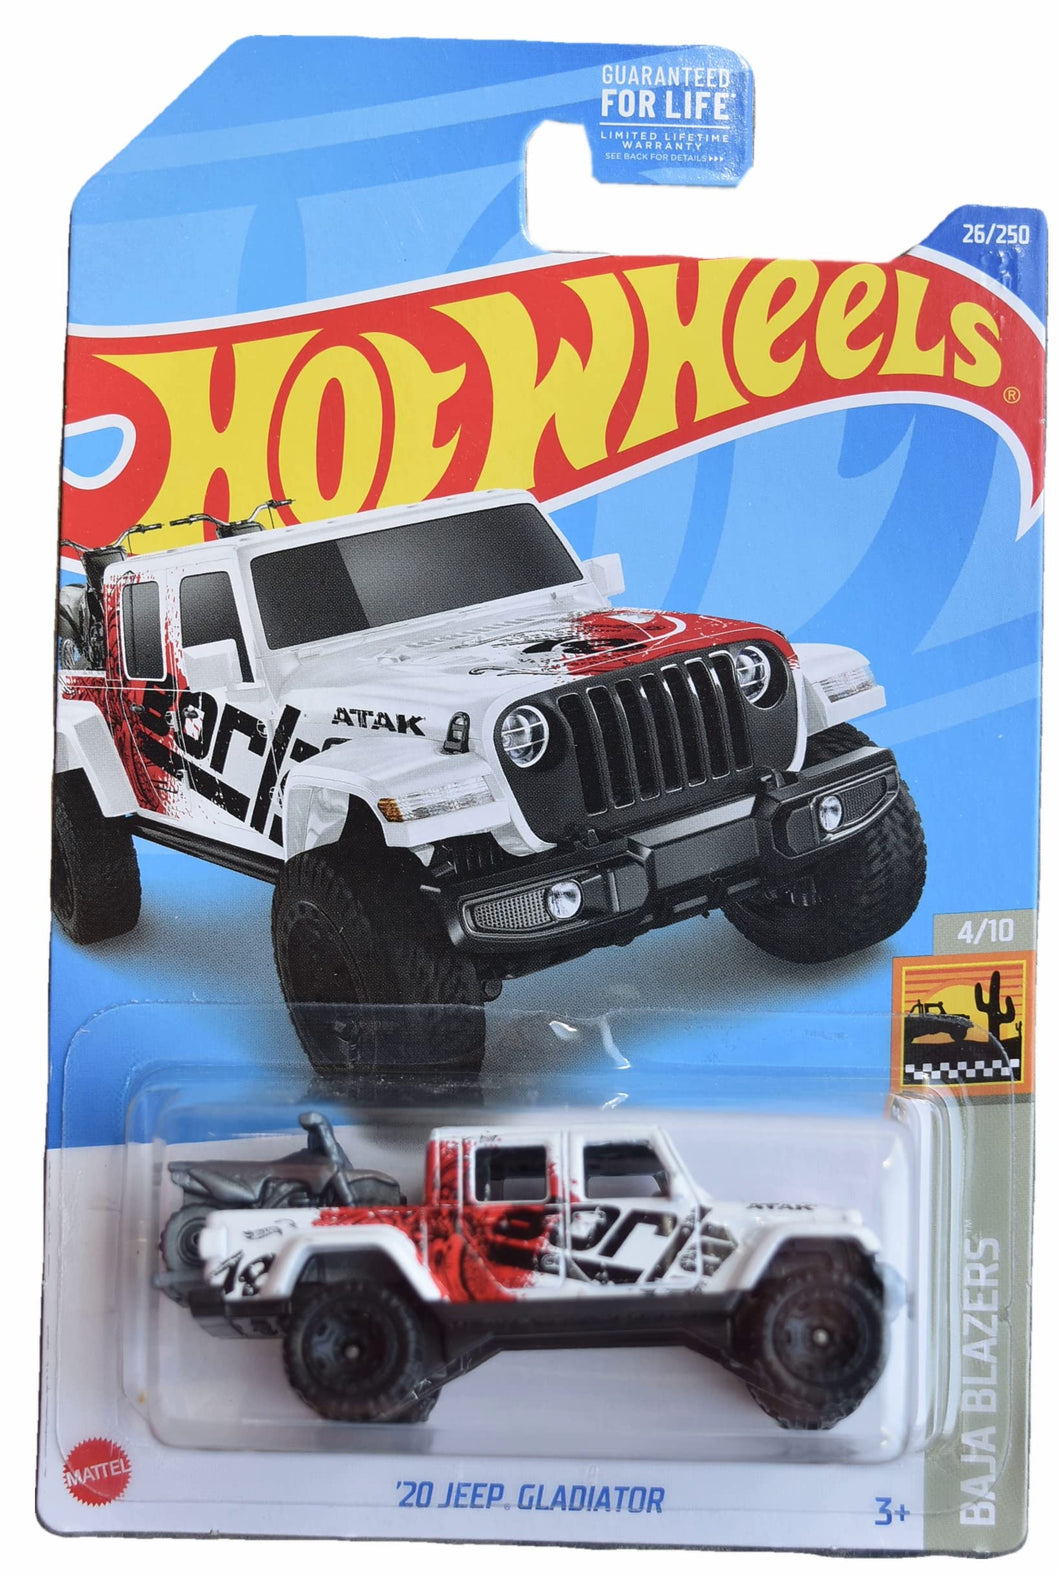 Hot Wheels '20 Jeep Gladiator Baja Blazers 4/10 26/250 - Assorted